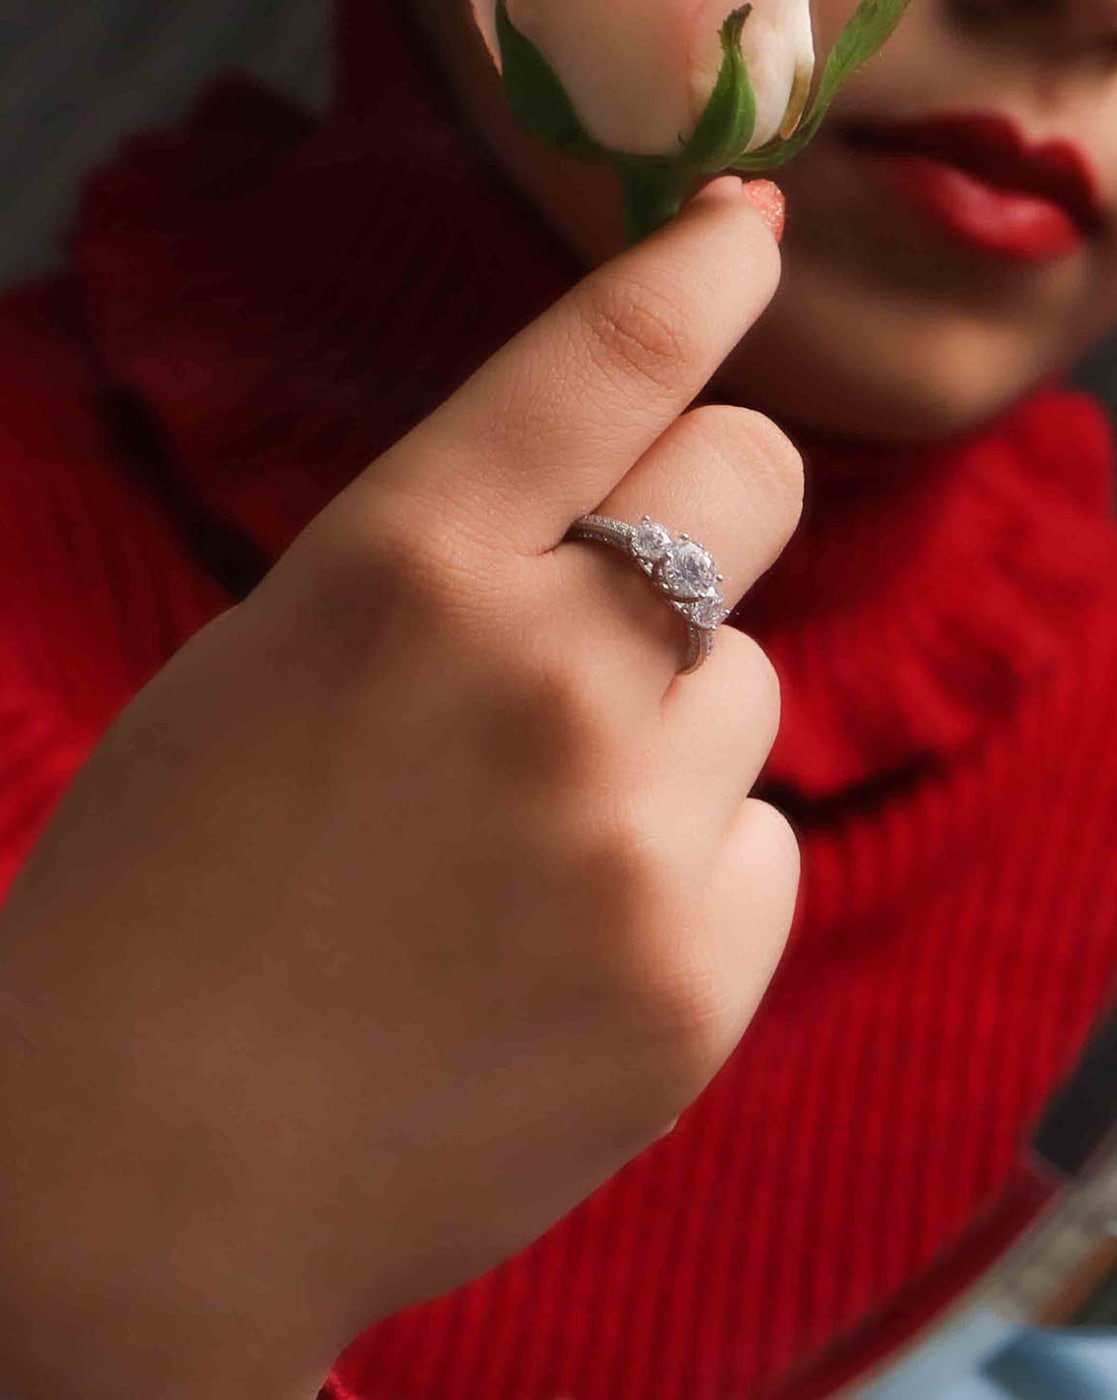 Wholesale Jewelry Lady Heart Shape Metal Artificial Diamond Inlay Open Rings